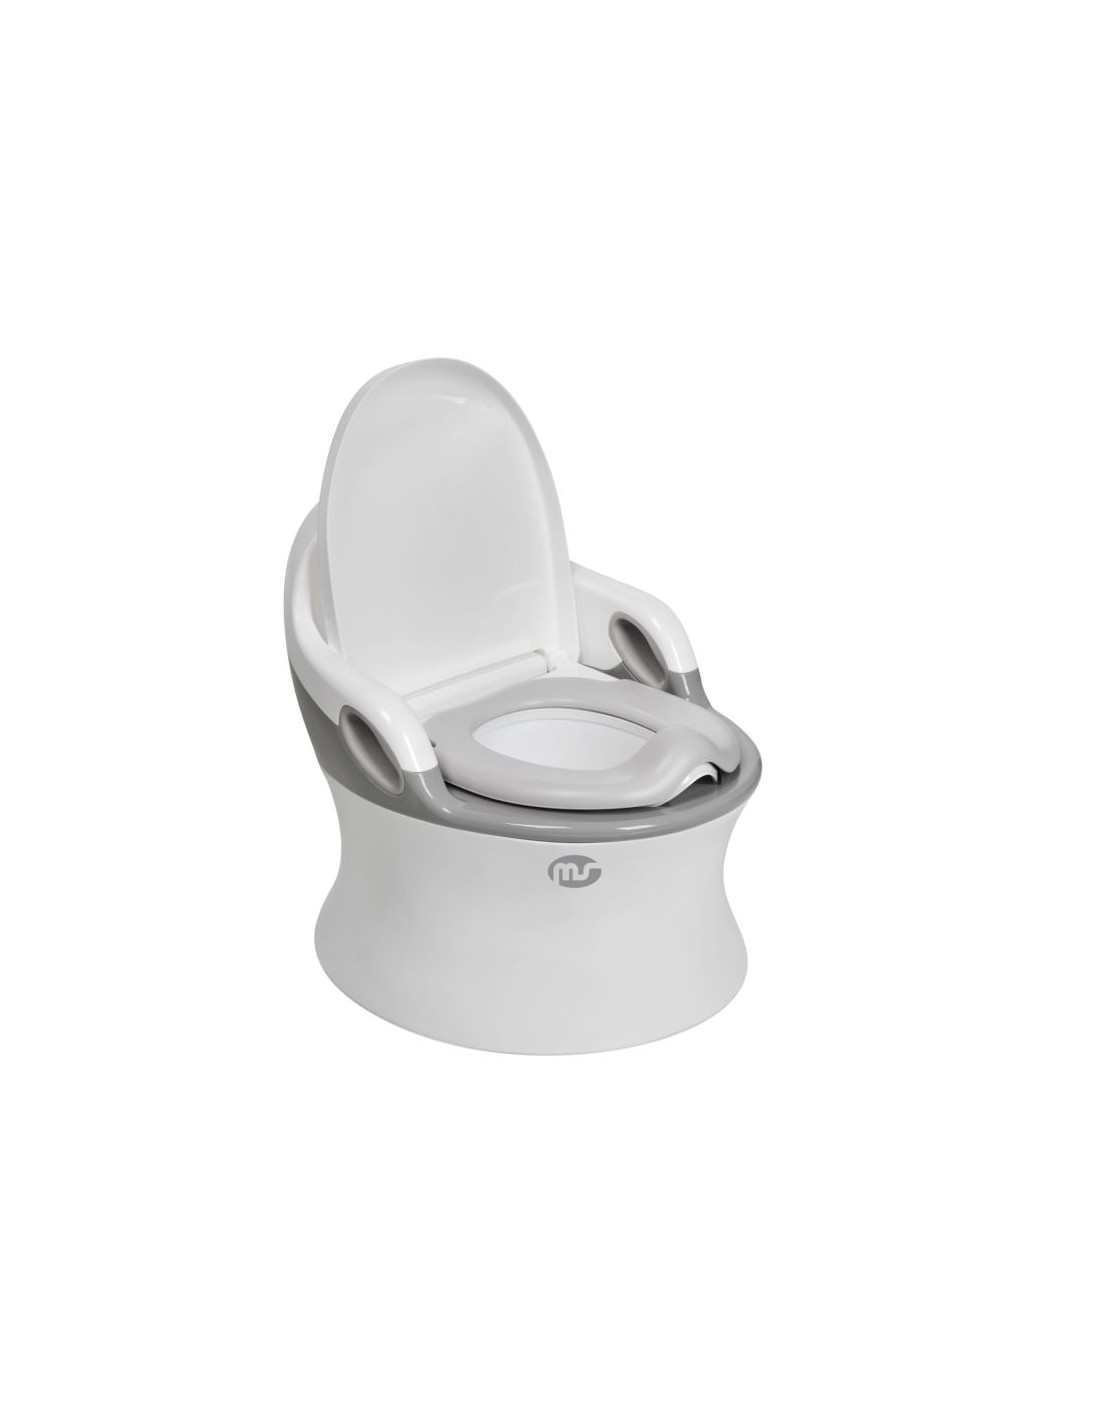 Petitxumet Orinal Infantil 3 en 1 Reductor WC Portátil y Plegable